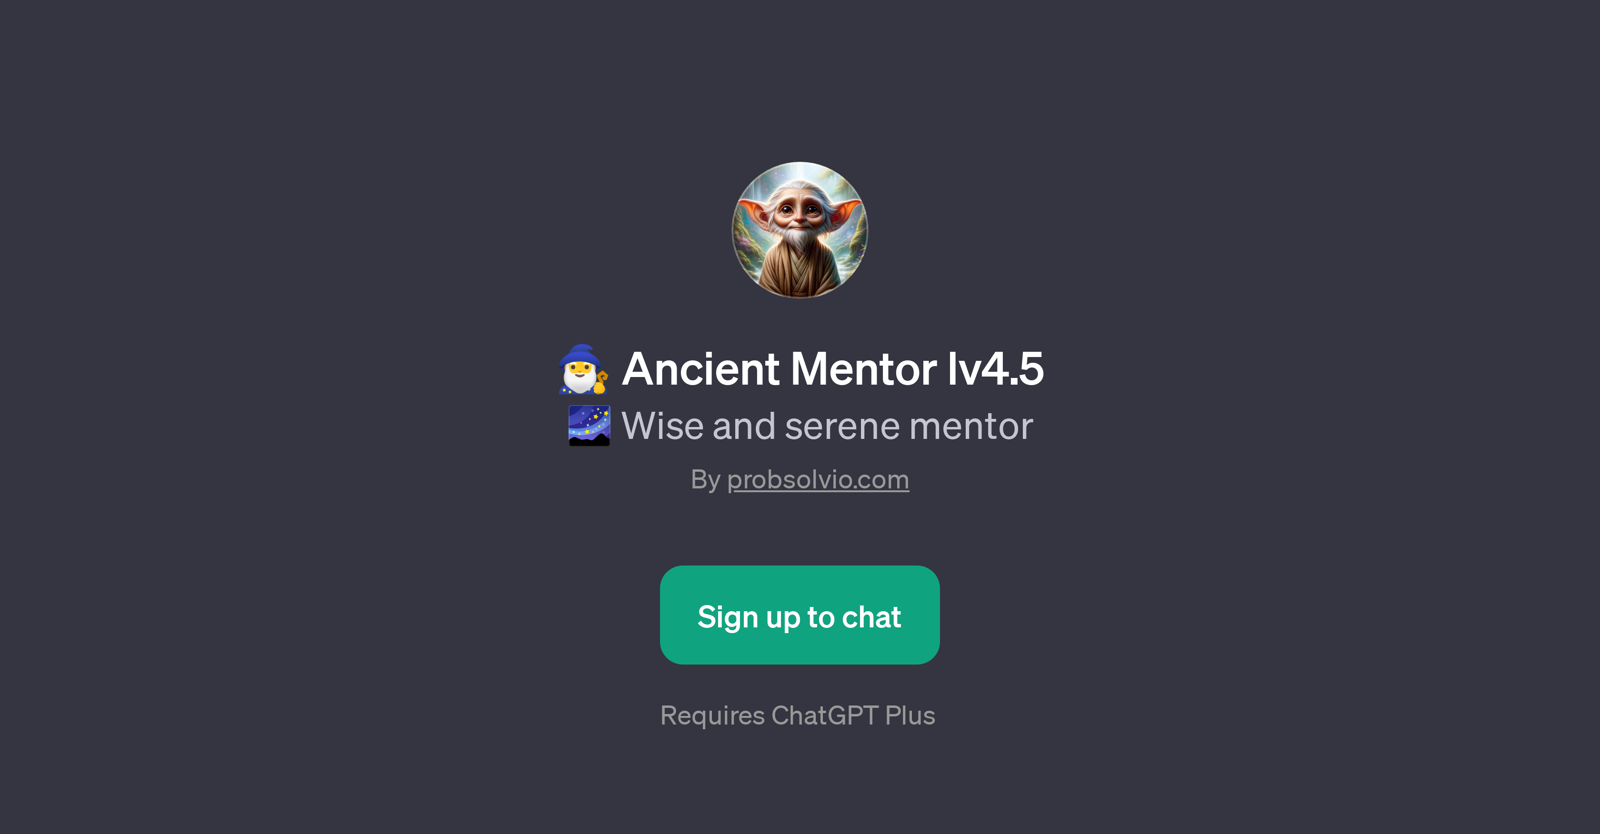 Ancient Mentor lv4.5 website